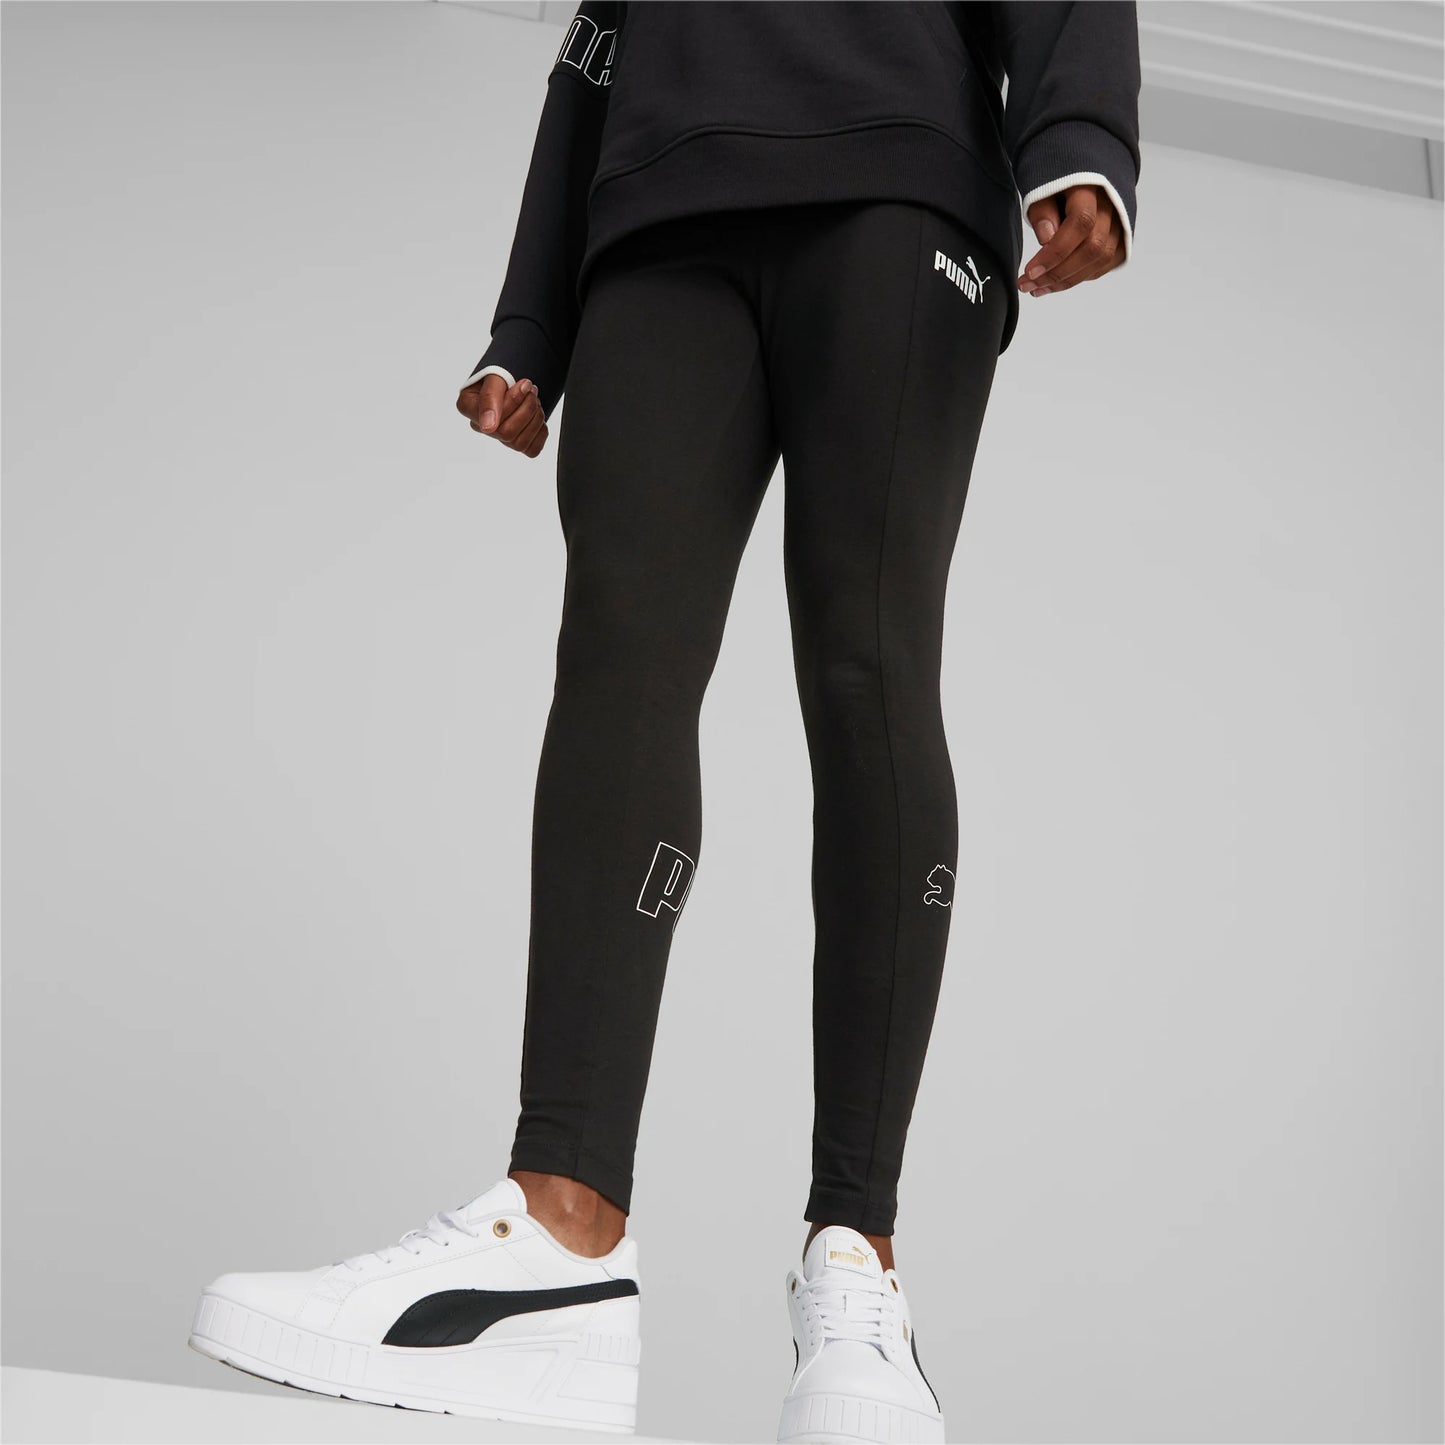 Puma Black & White Color-Block Sports Leggings